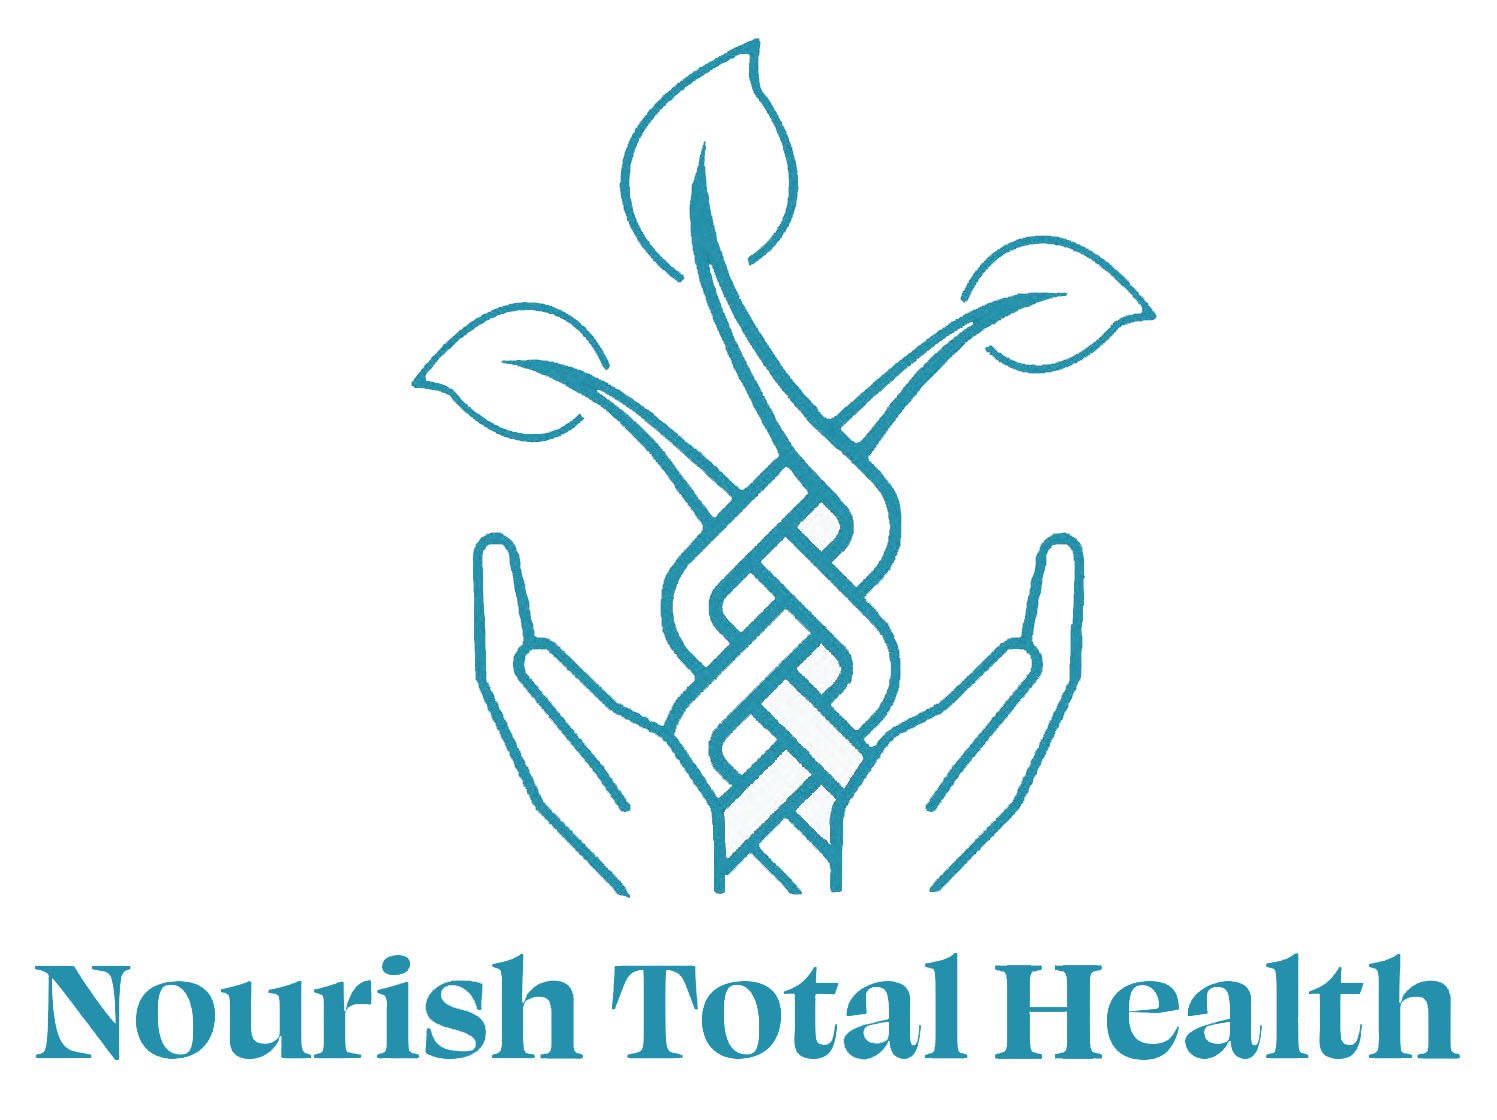 Nourish - Total Health